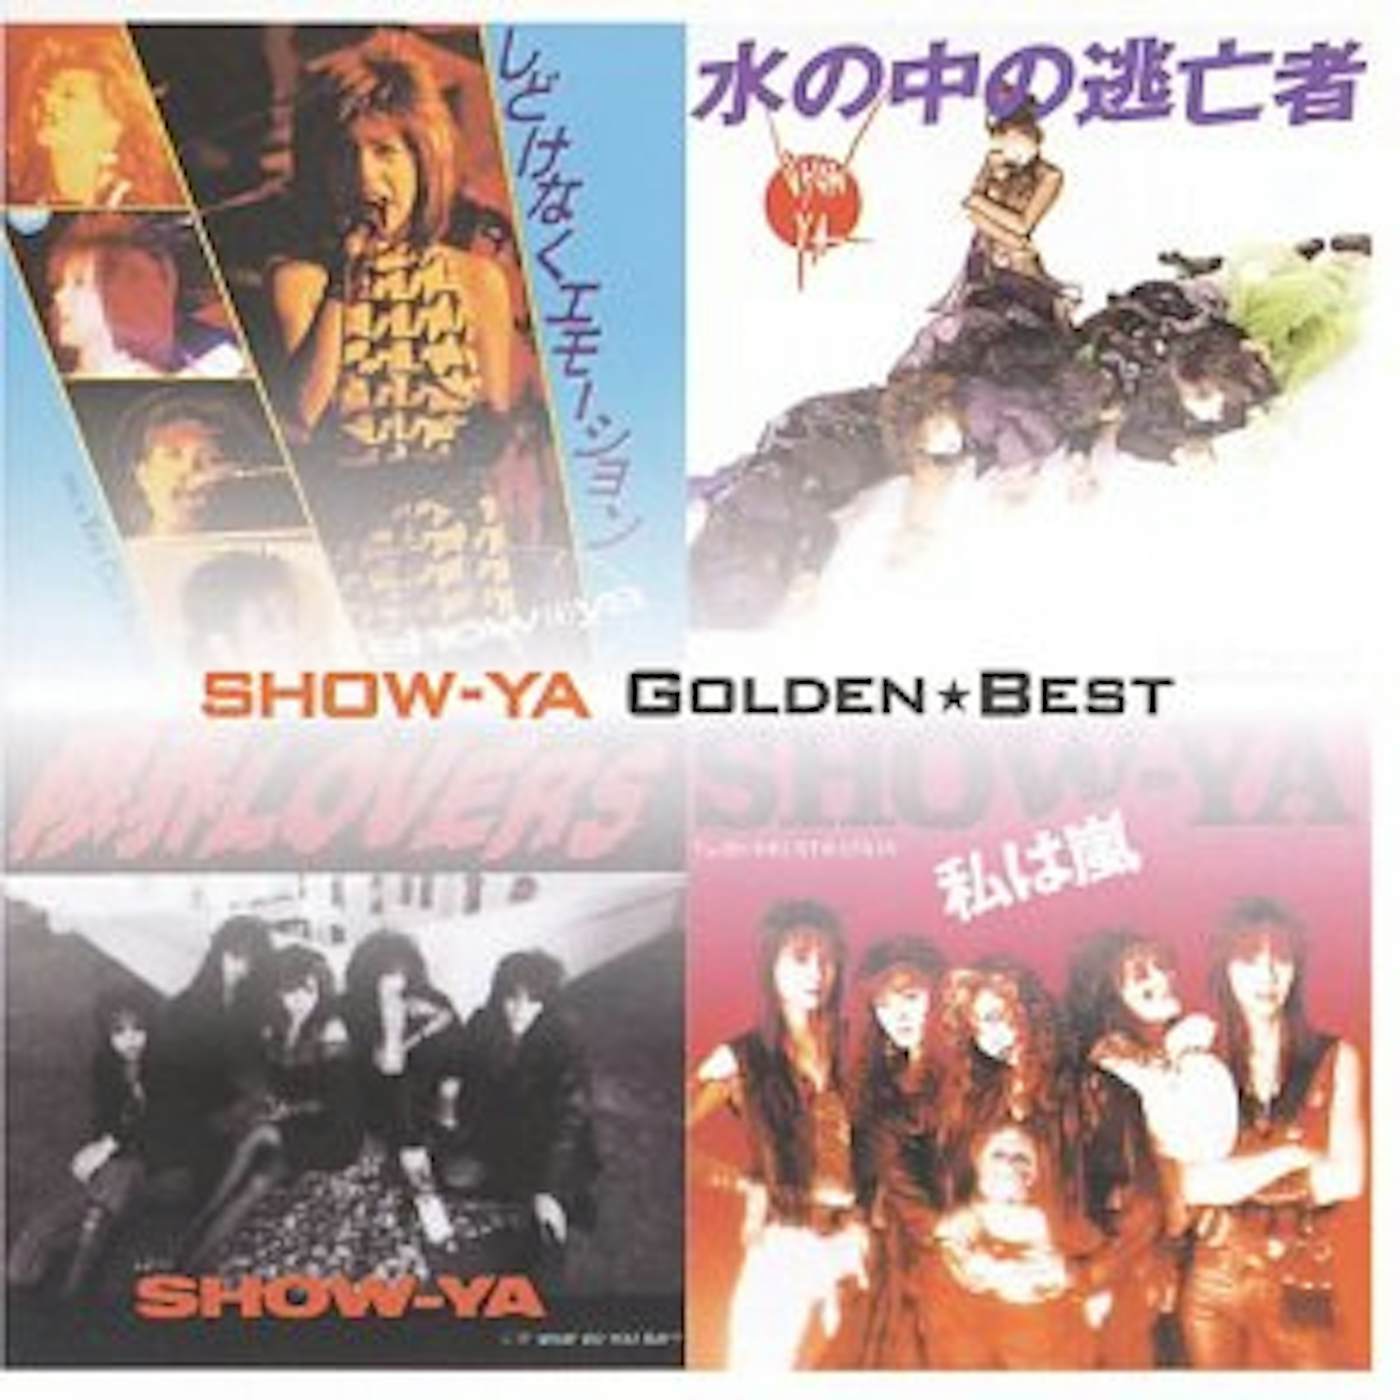 SHOW-YA GOLDEN BEST CD